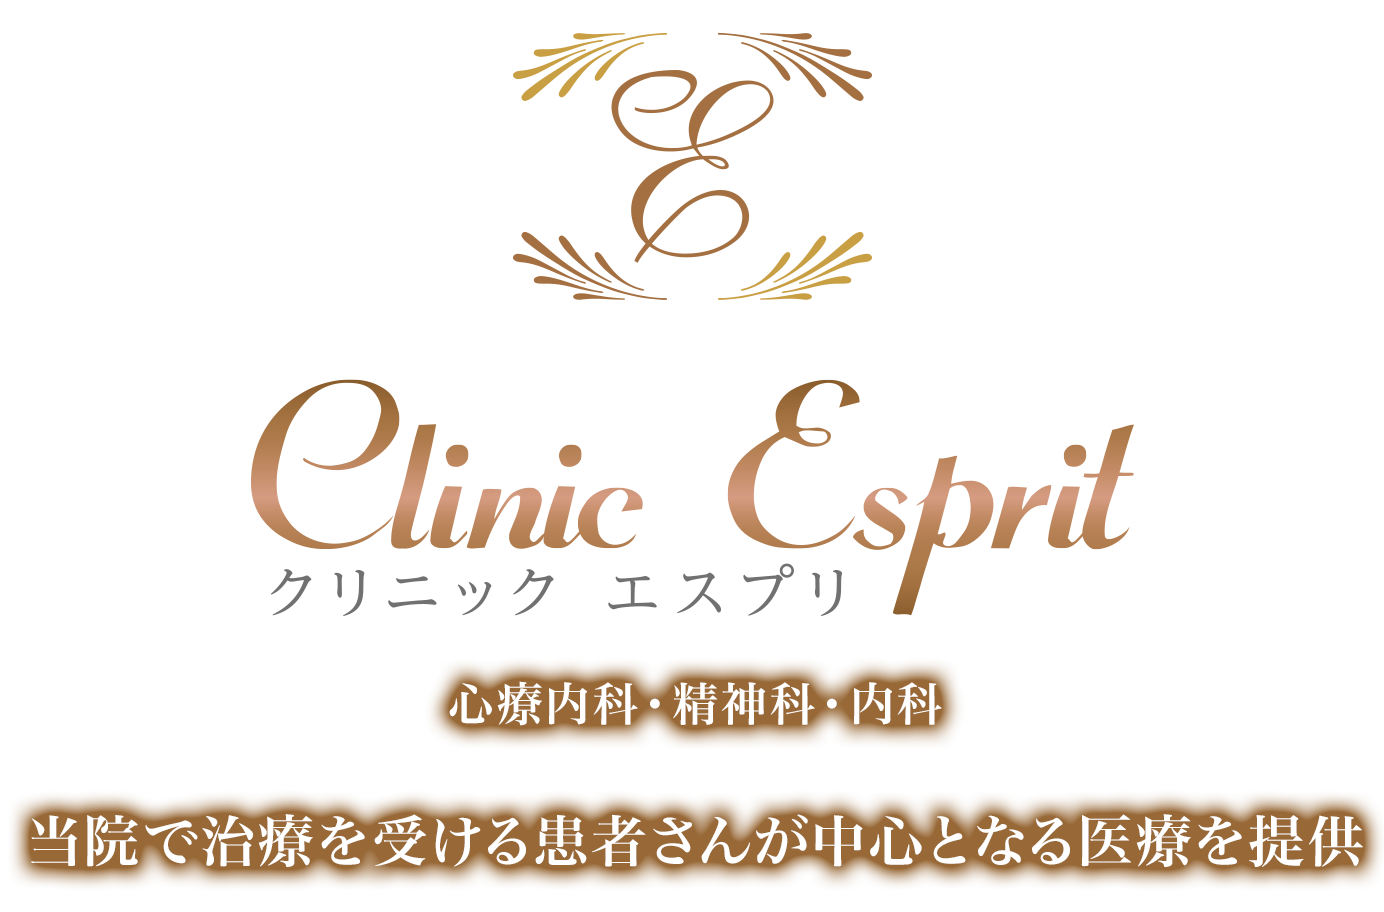 Clinic Esprit（クリニックエスプリ）